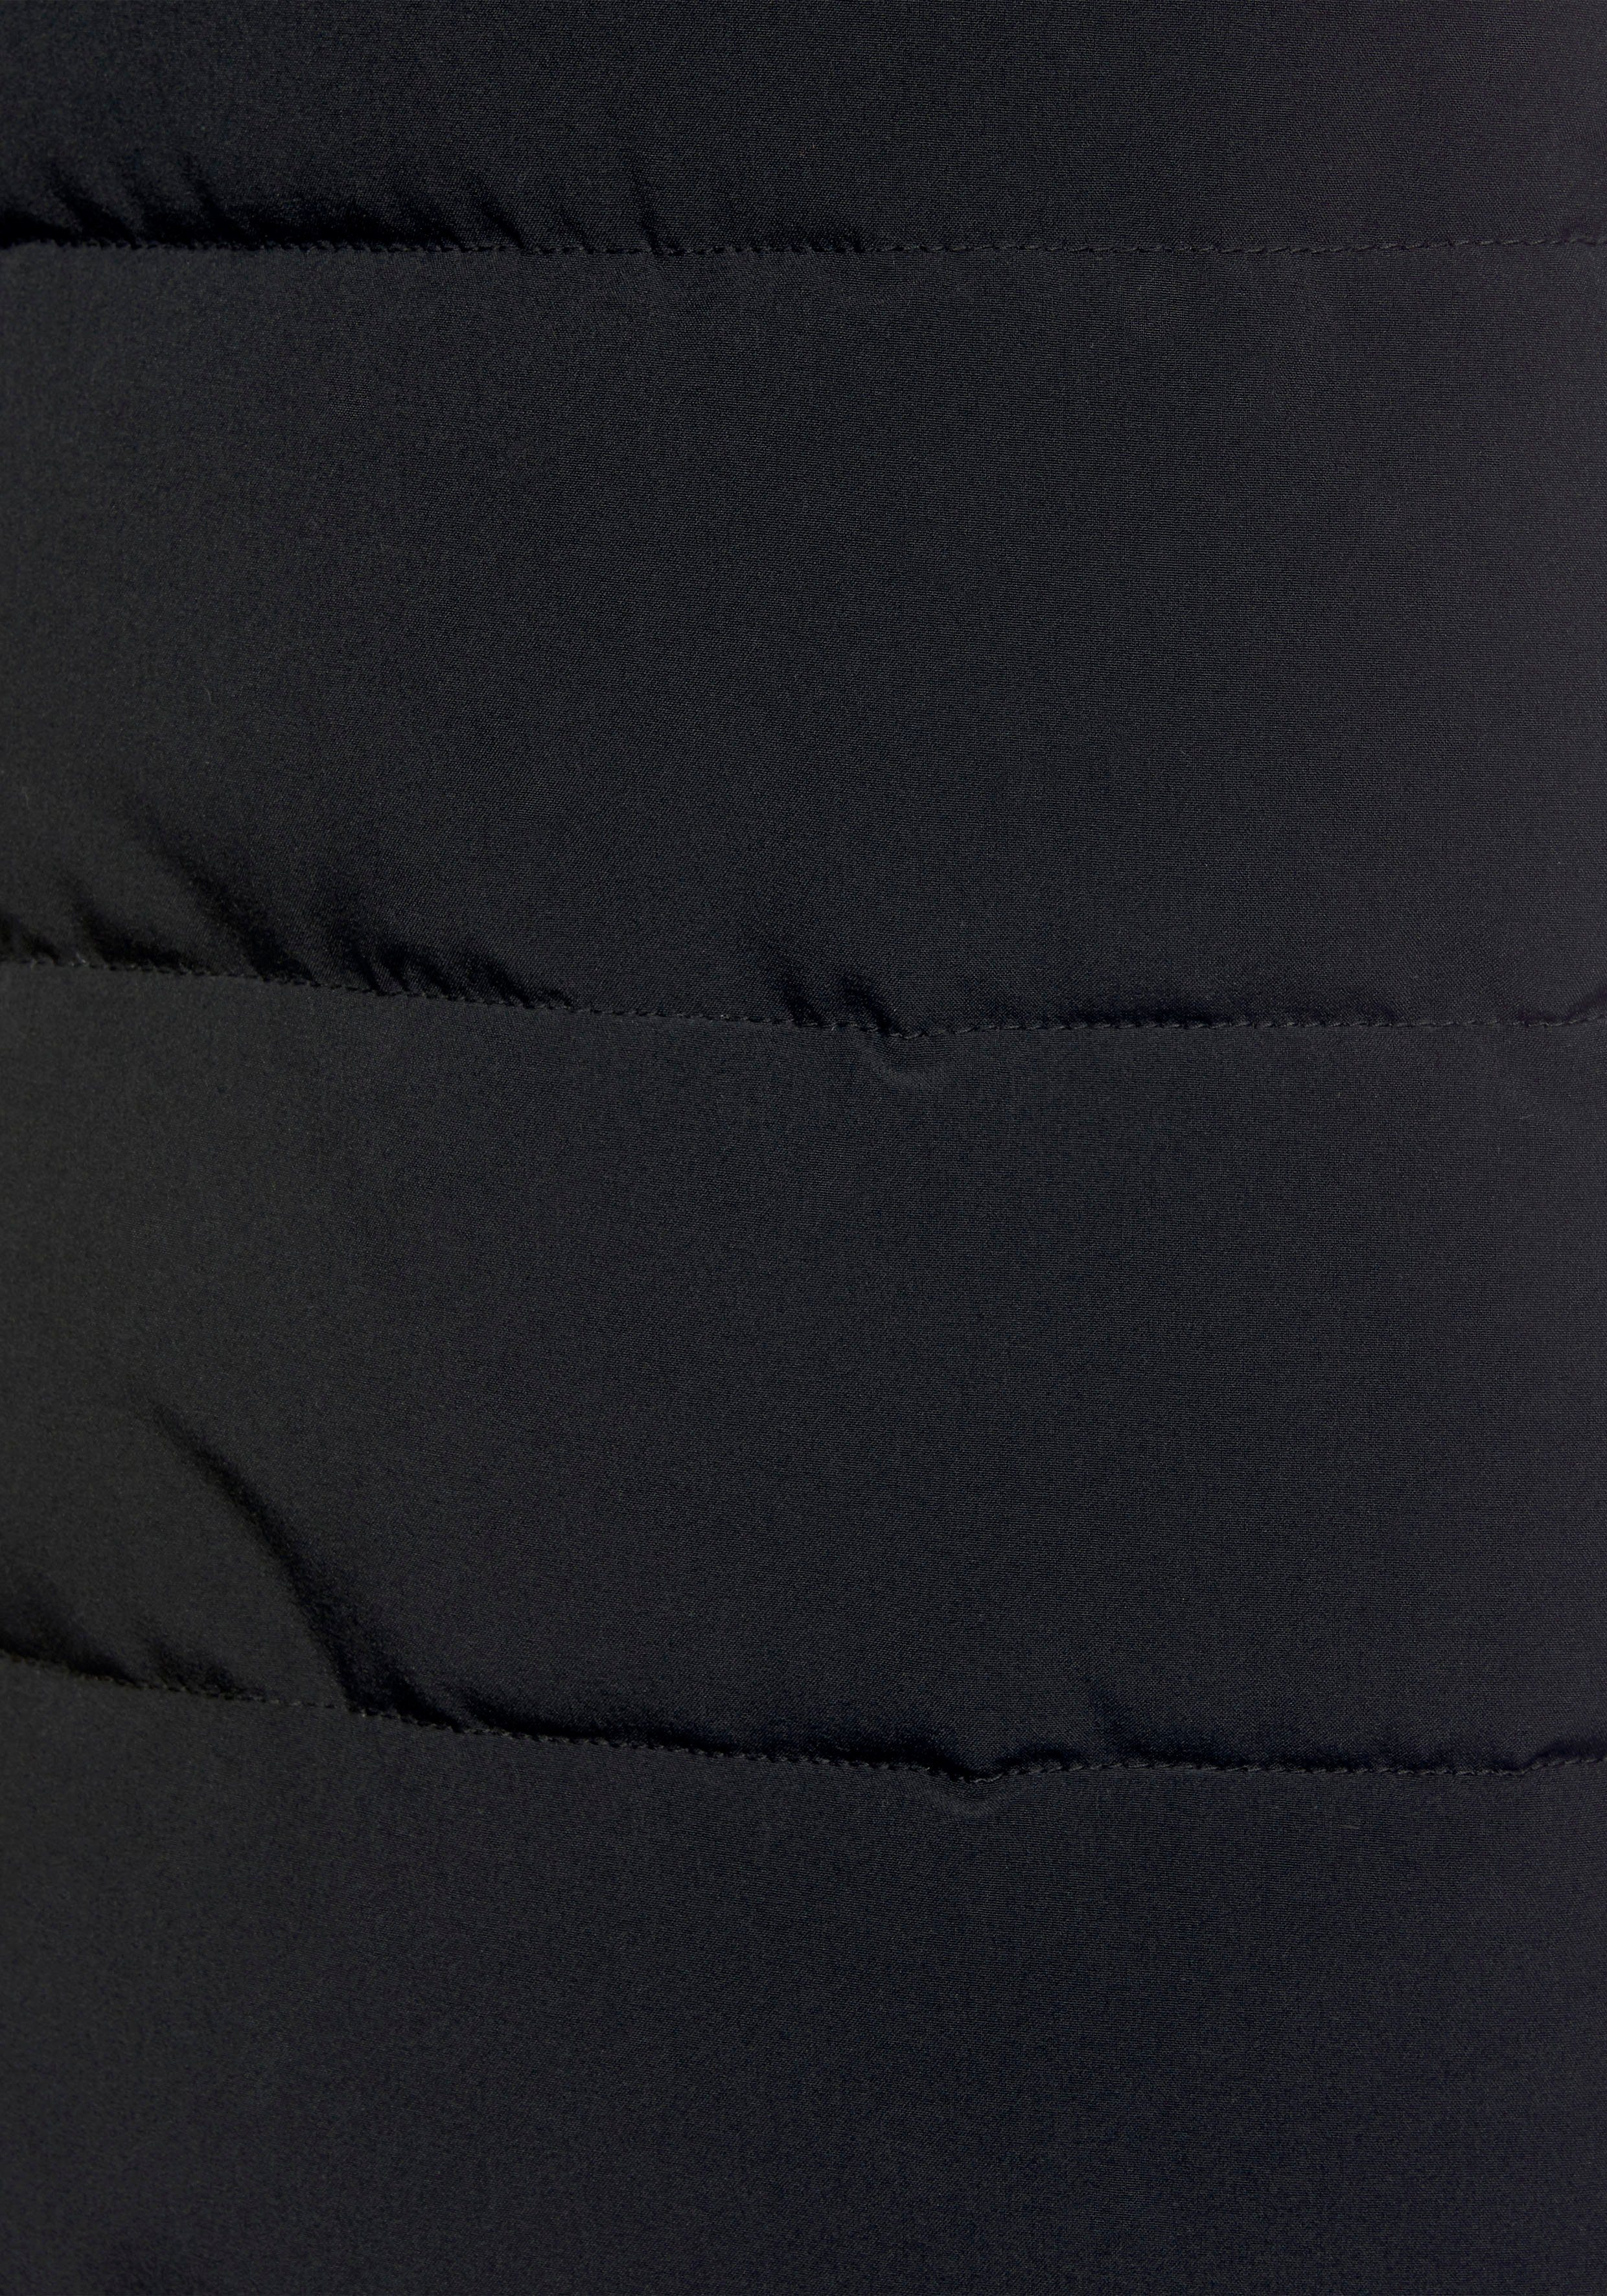 Gürtel aus (Jacke Markenprägung Steppmantel Oslo abnehmbarer Kuschel-Kapuze Mantel nachhaltigem mit auf long & ALPENBLITZ Material) black dem